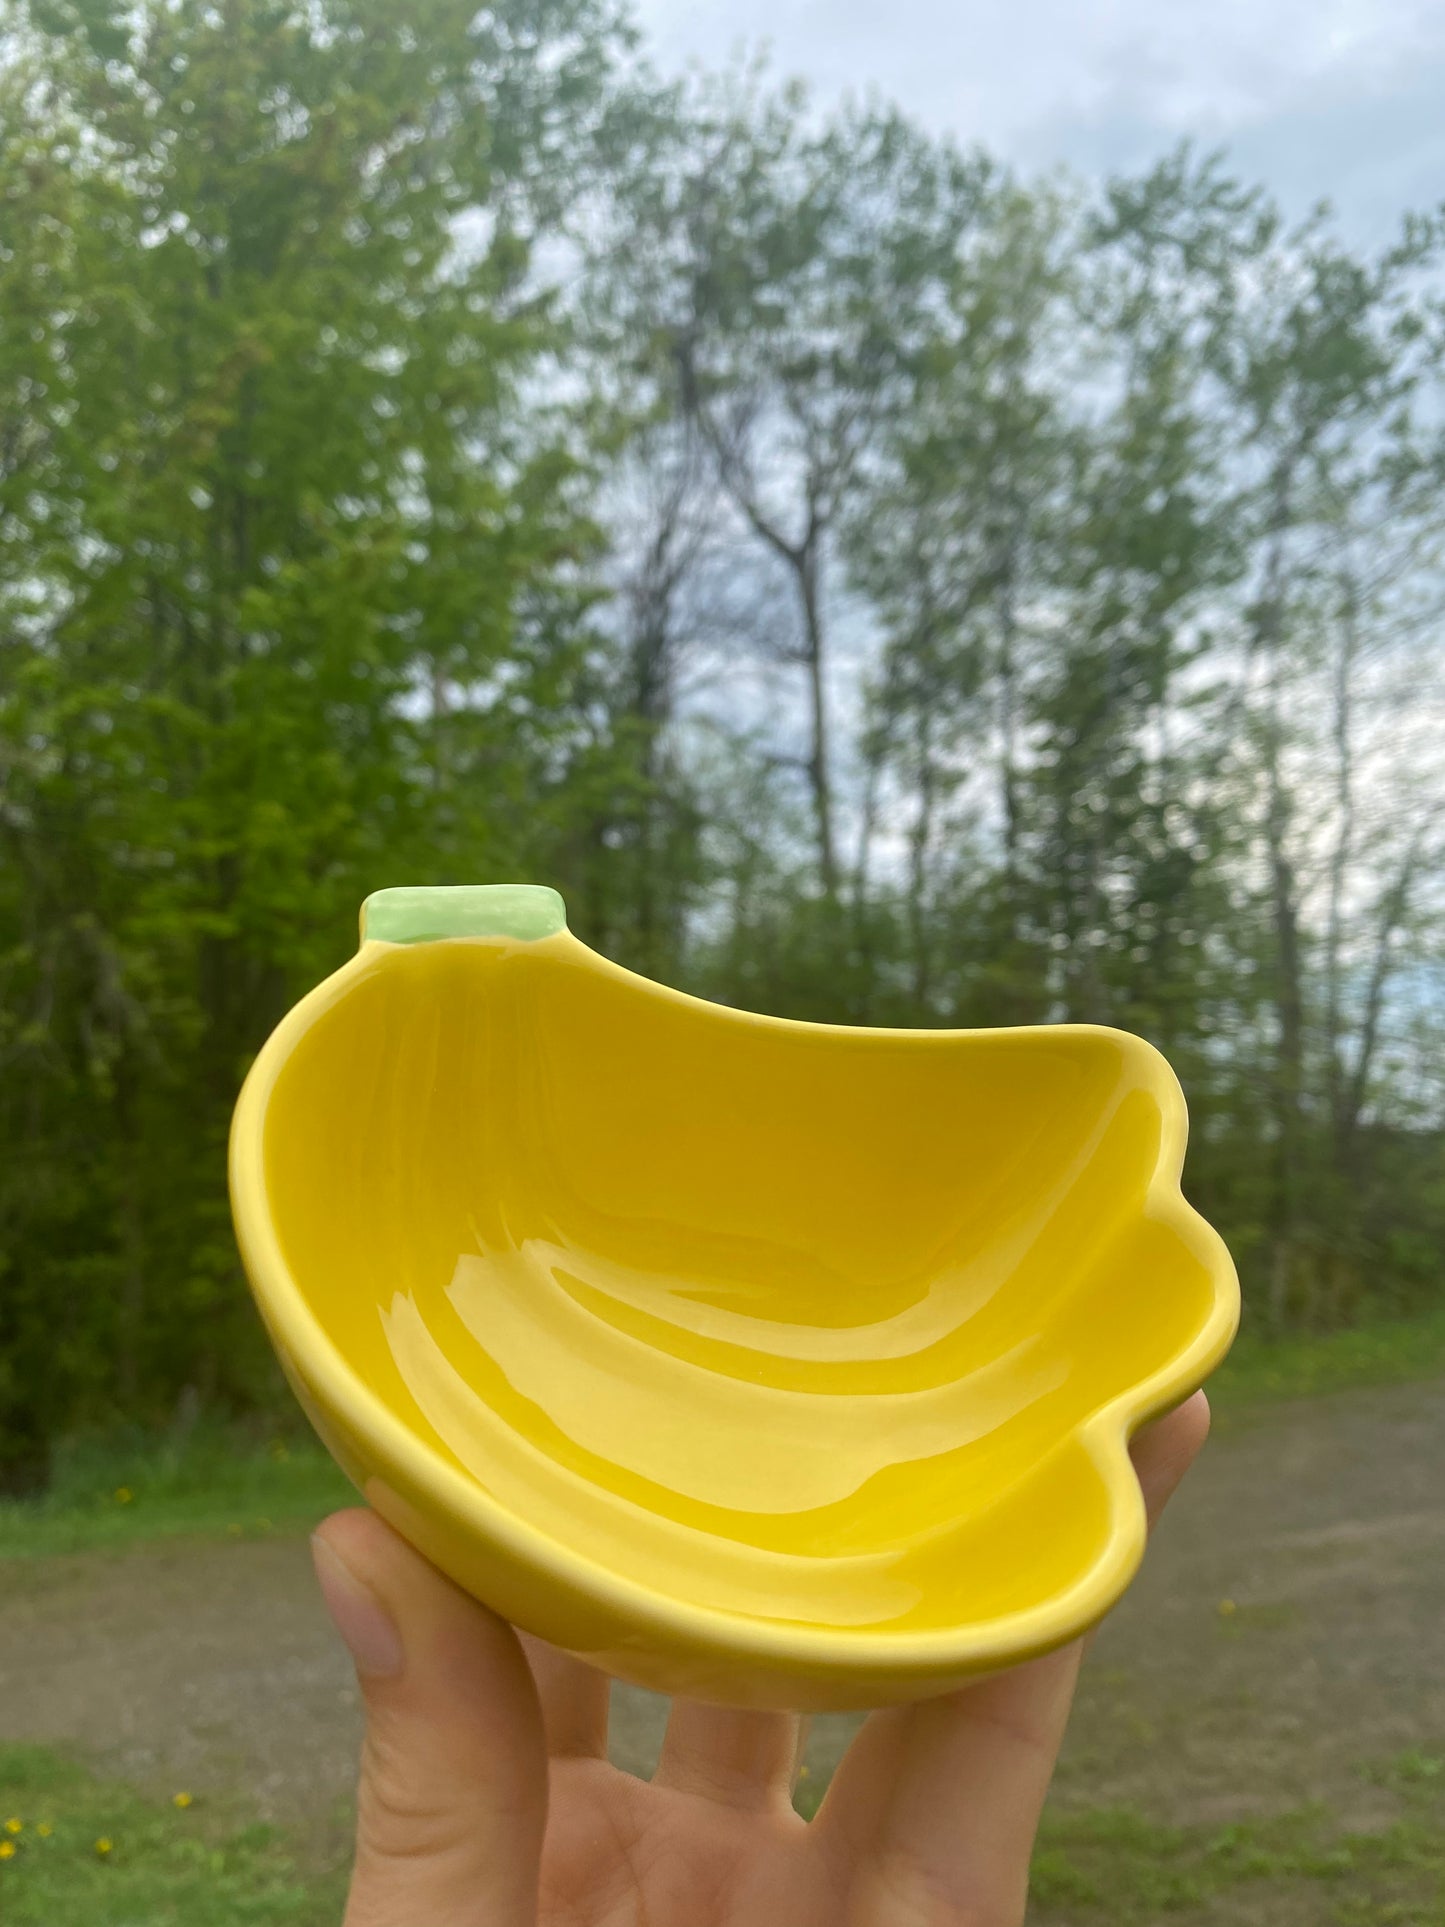 Banana shaped bowl - painted by hand